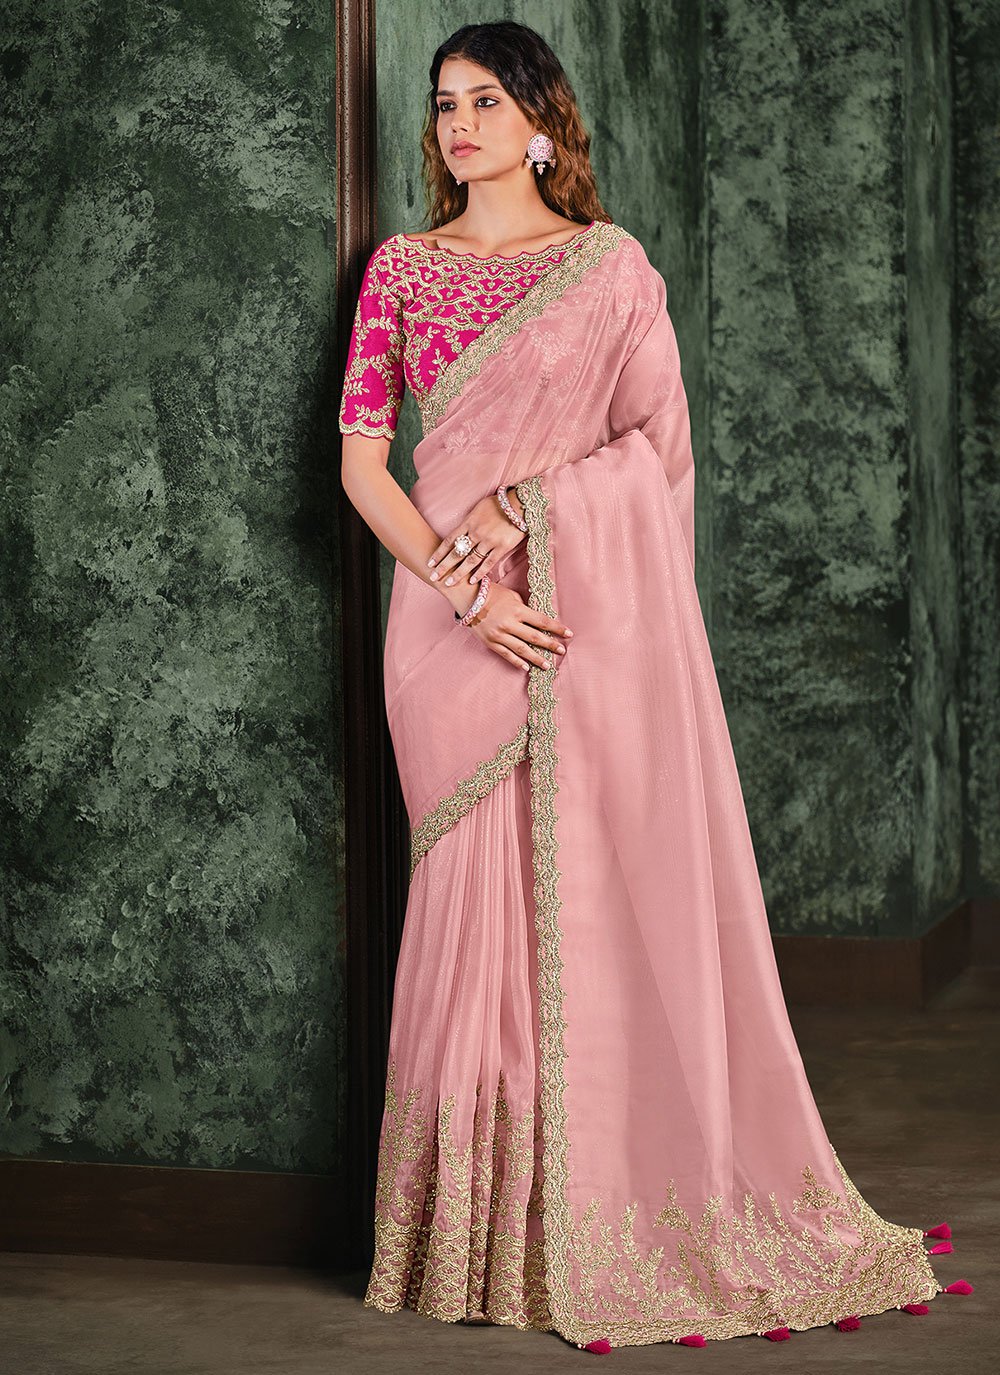 Kiara Advani-approved sarees for new brides​ | Zoom TV